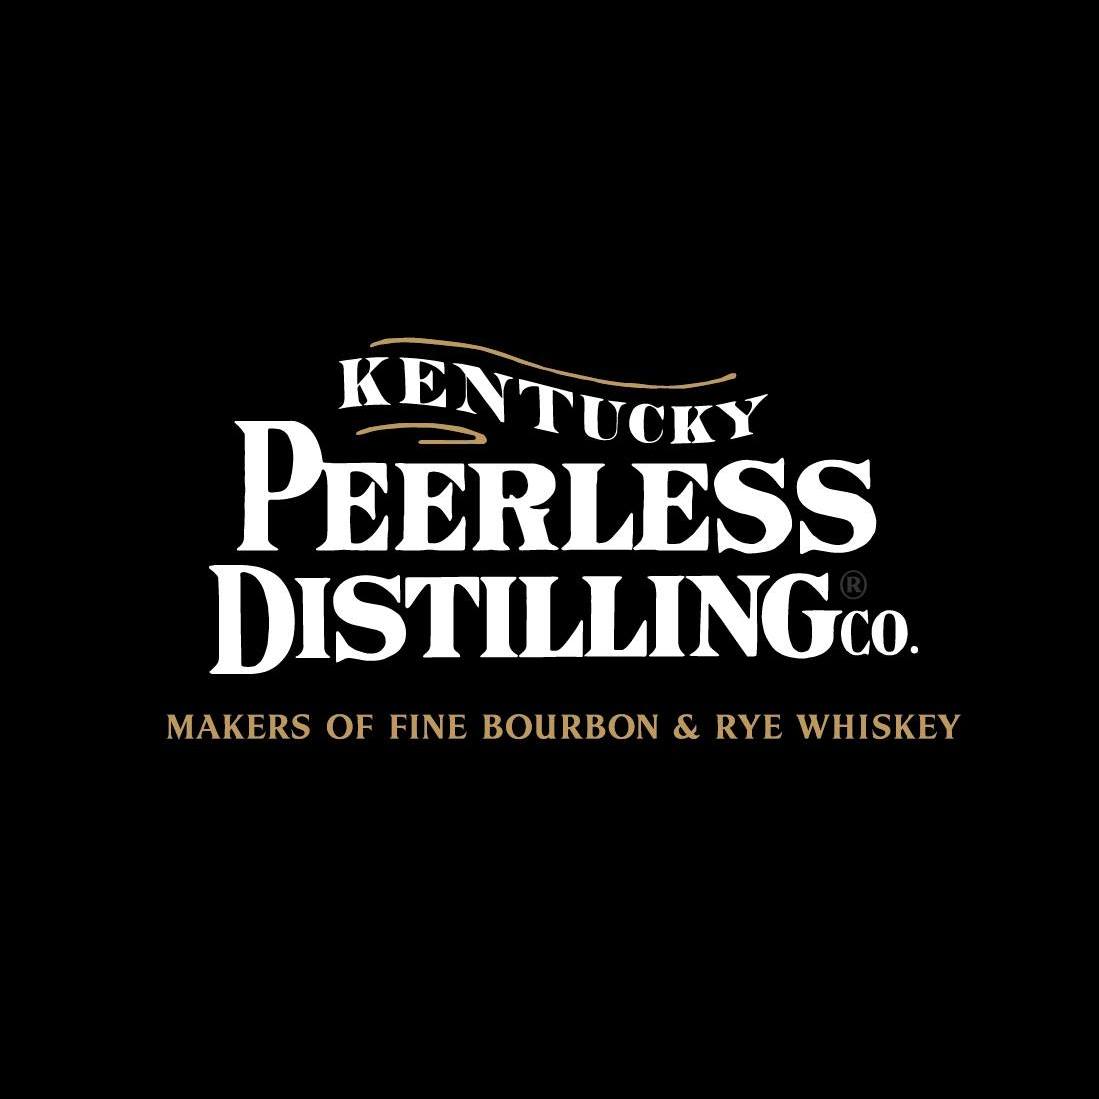 Kentucky Peerless Distilling Co logo